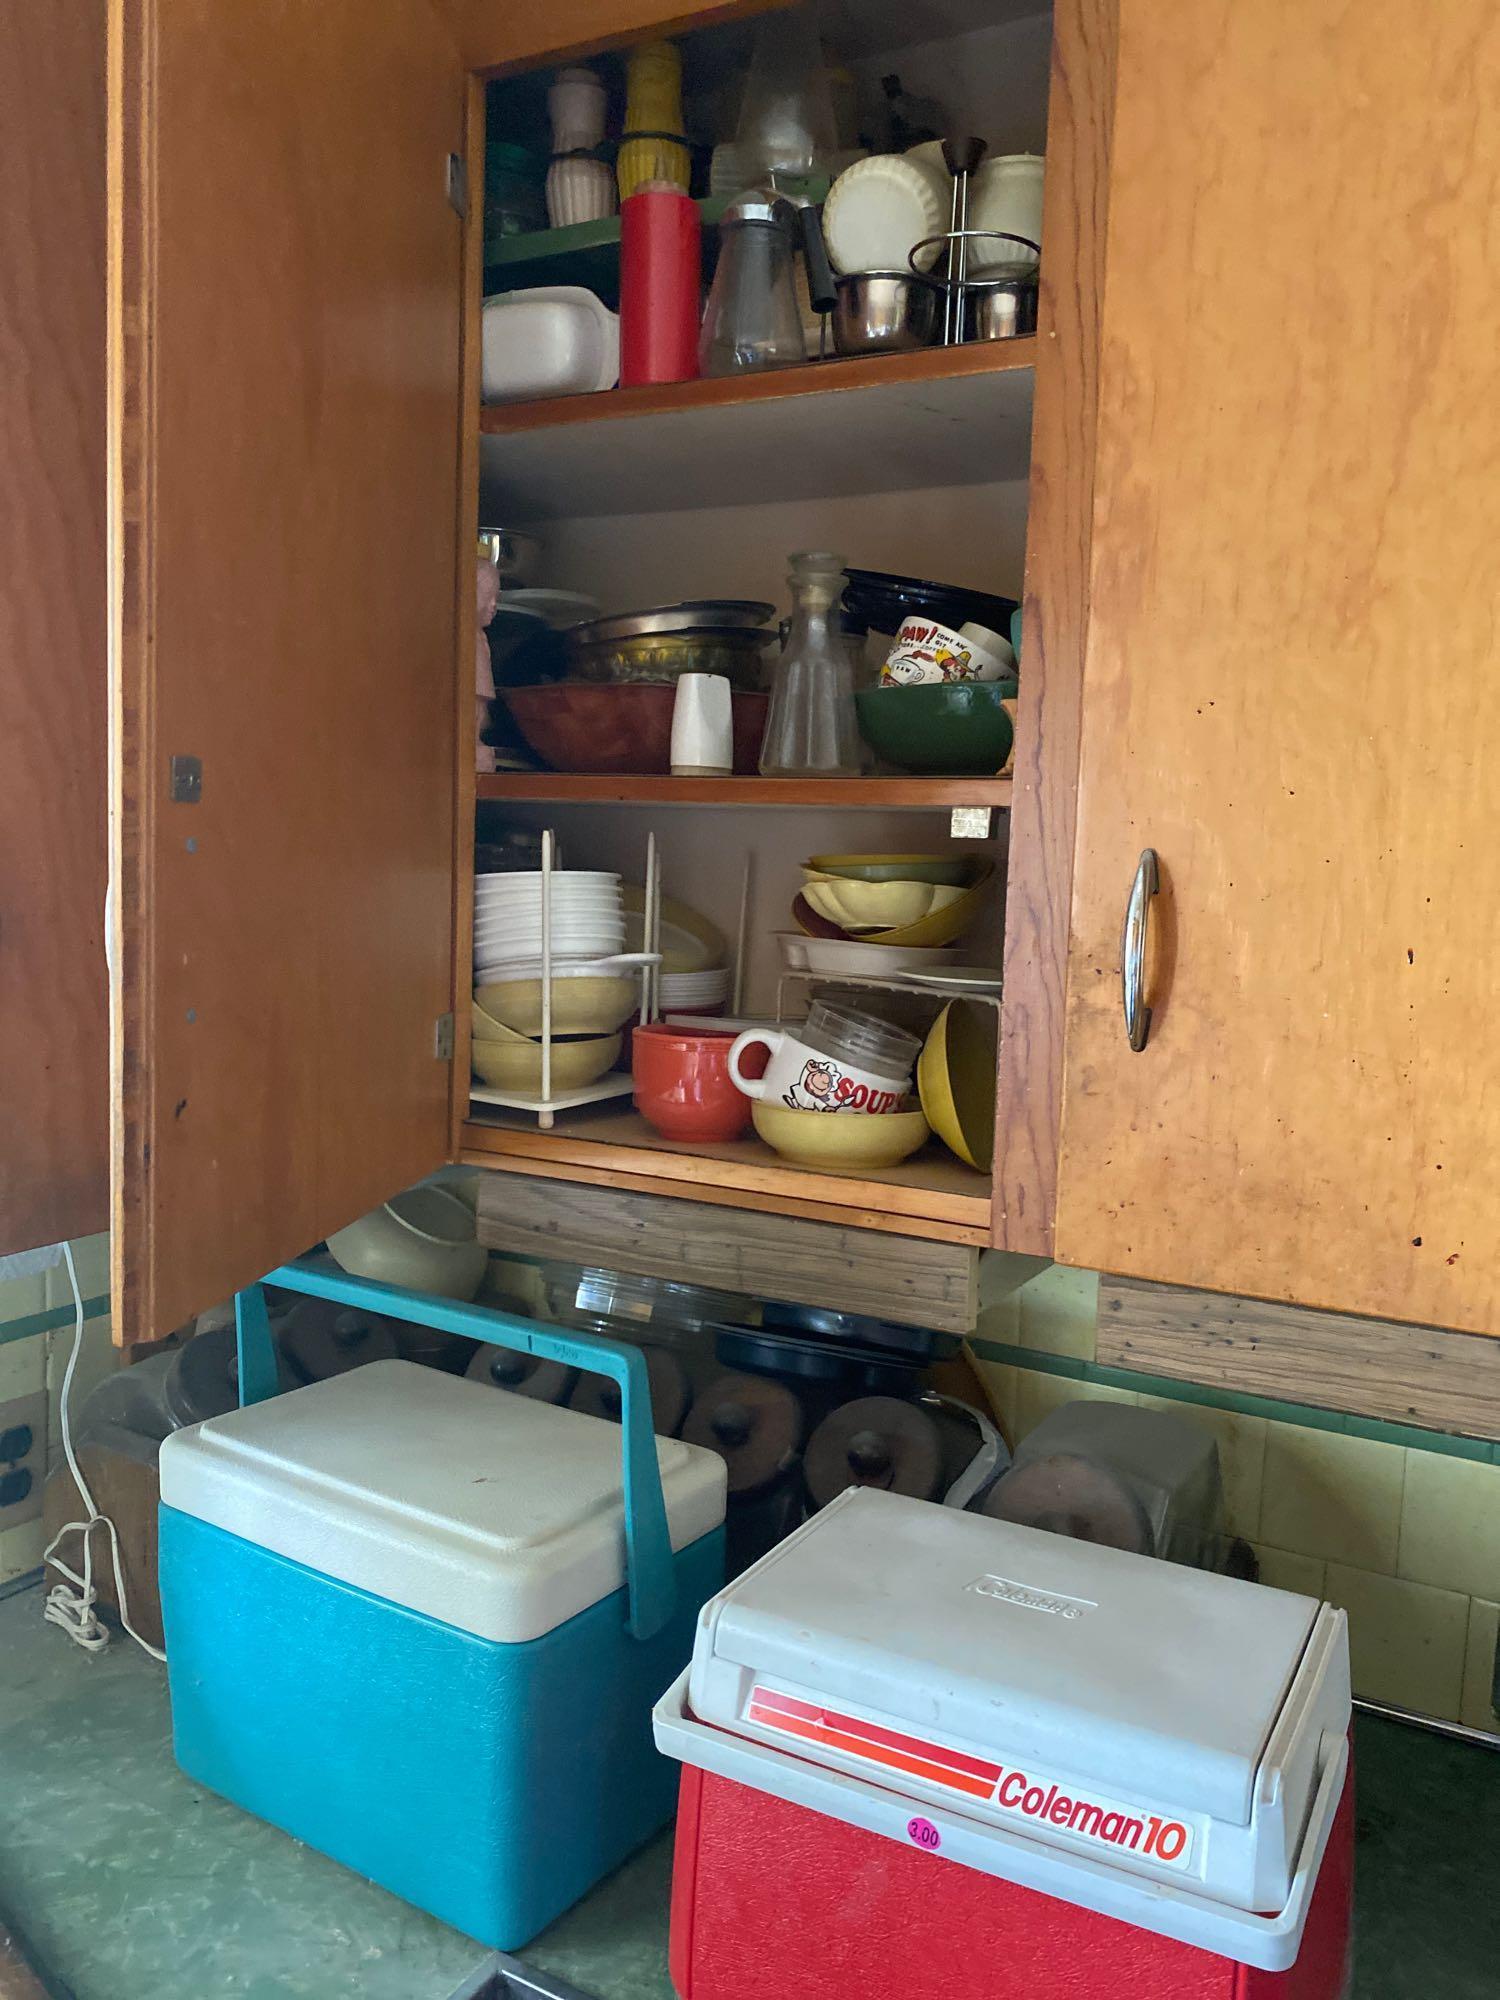 Contents of kitchen *NOT Appliances